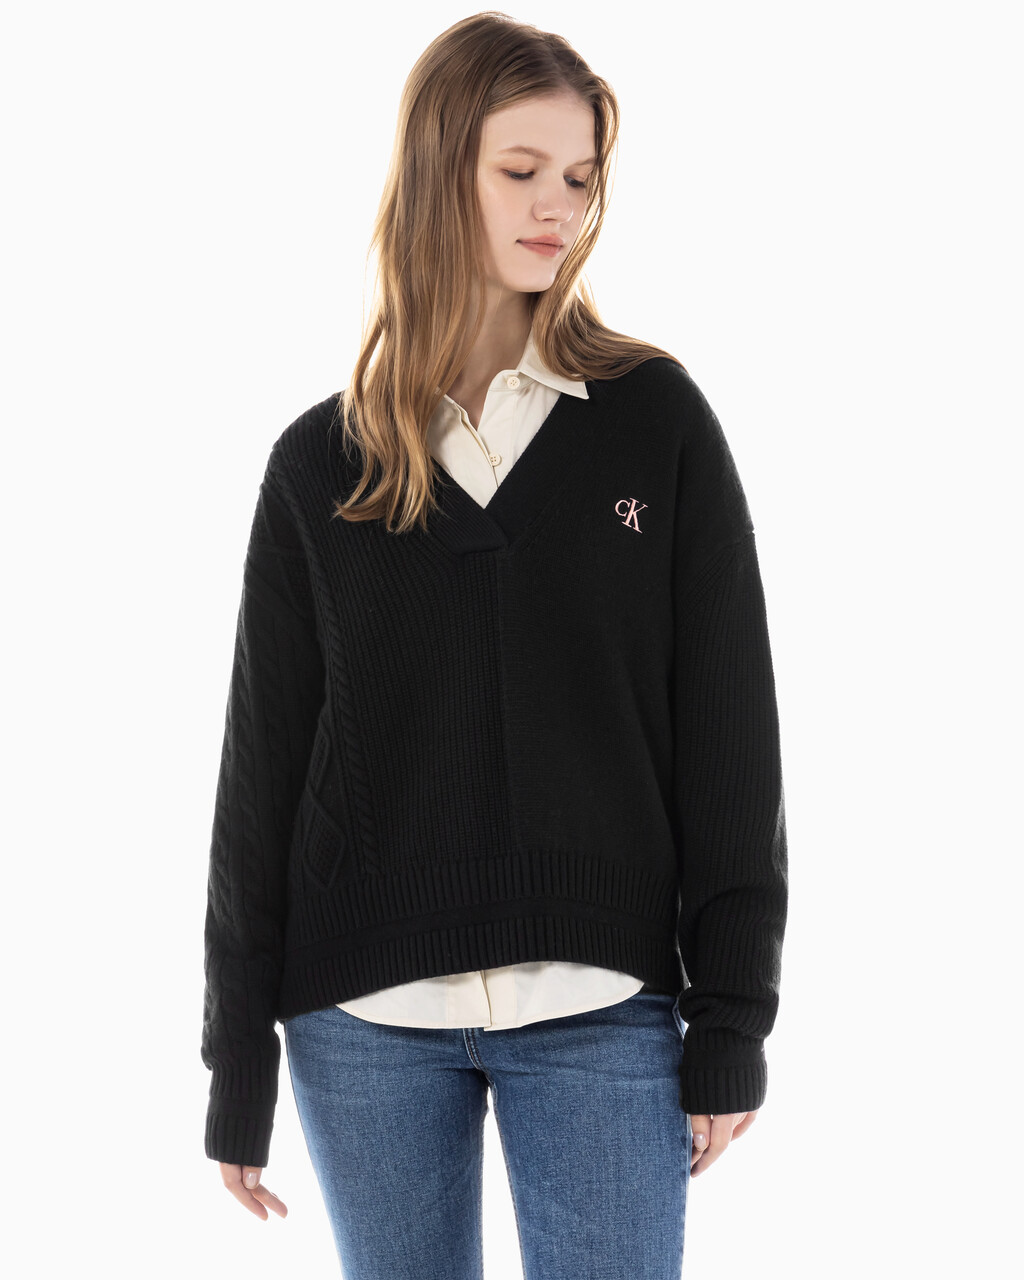 Buy 여성 케이블 인터레스트 브이넥 풀오버 울 스웨터 in color CK BLACK